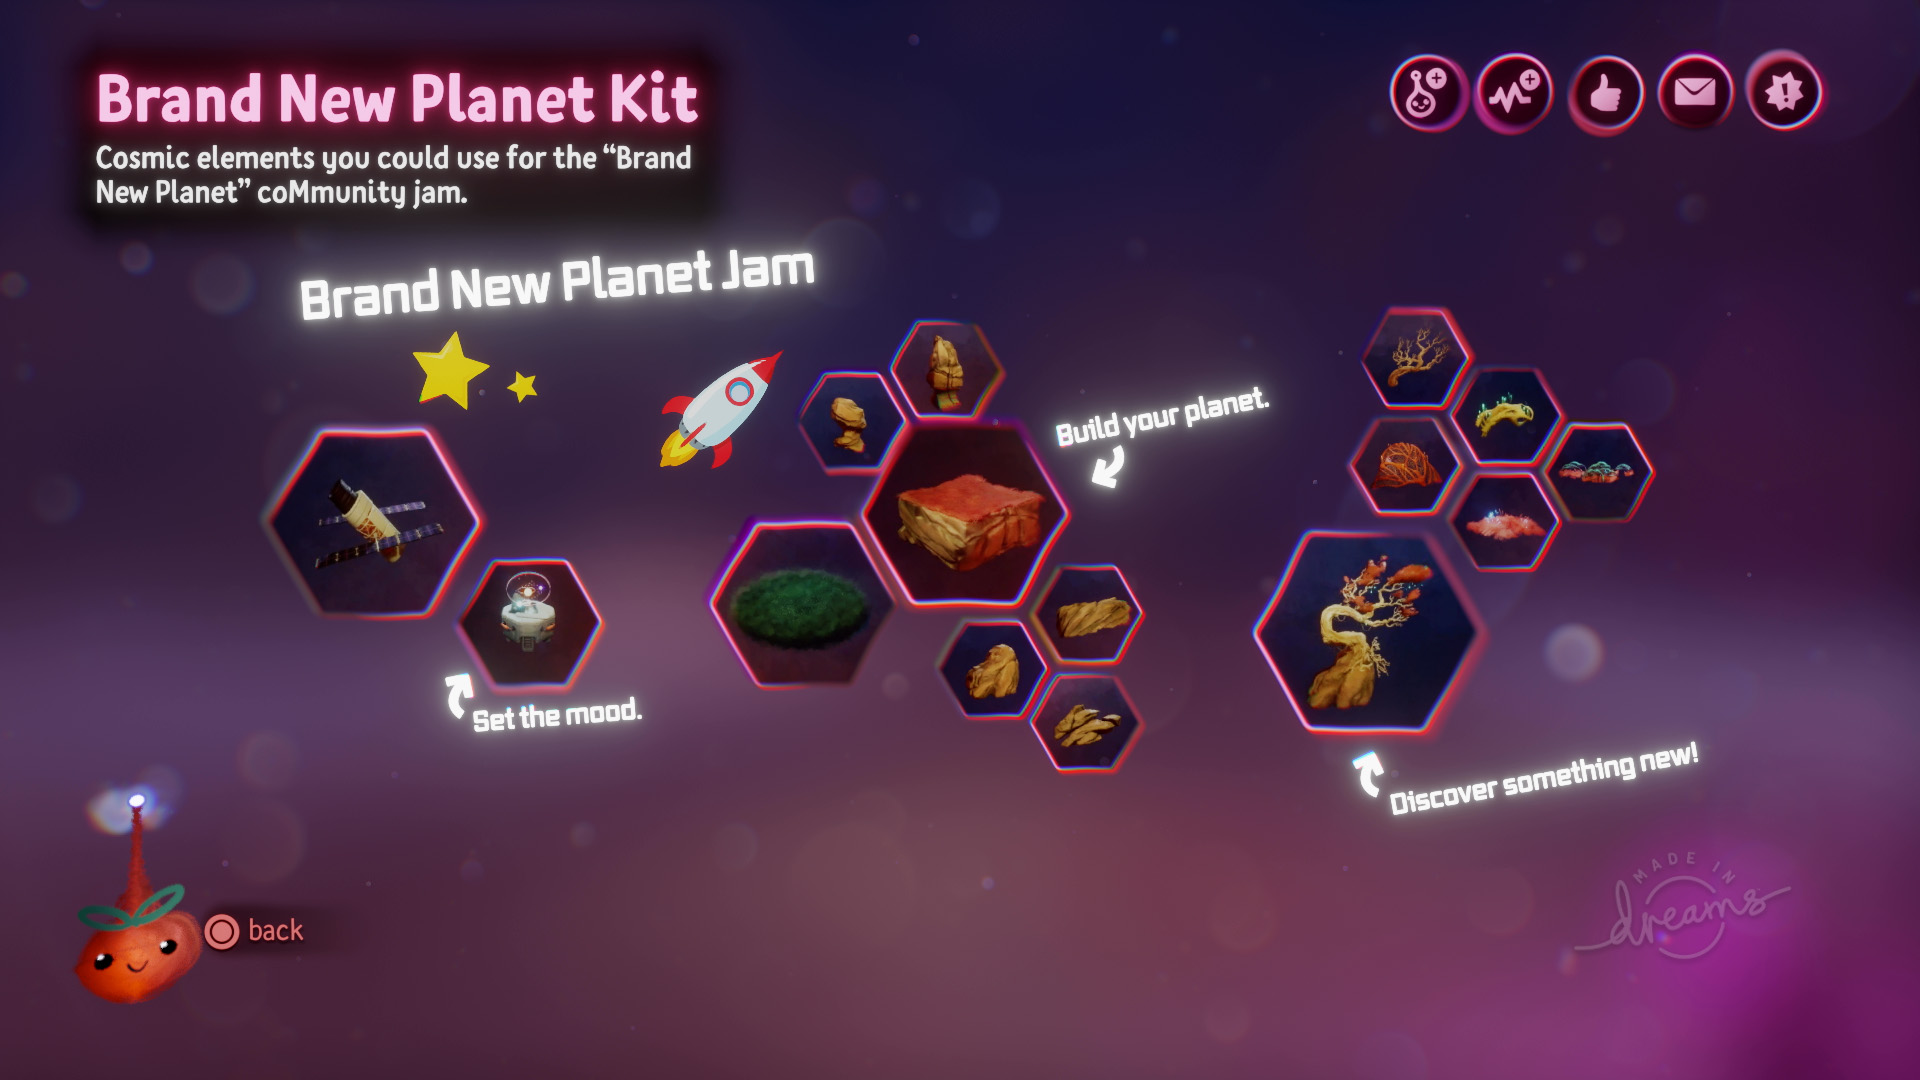 BBC - Brand New Planet Kit